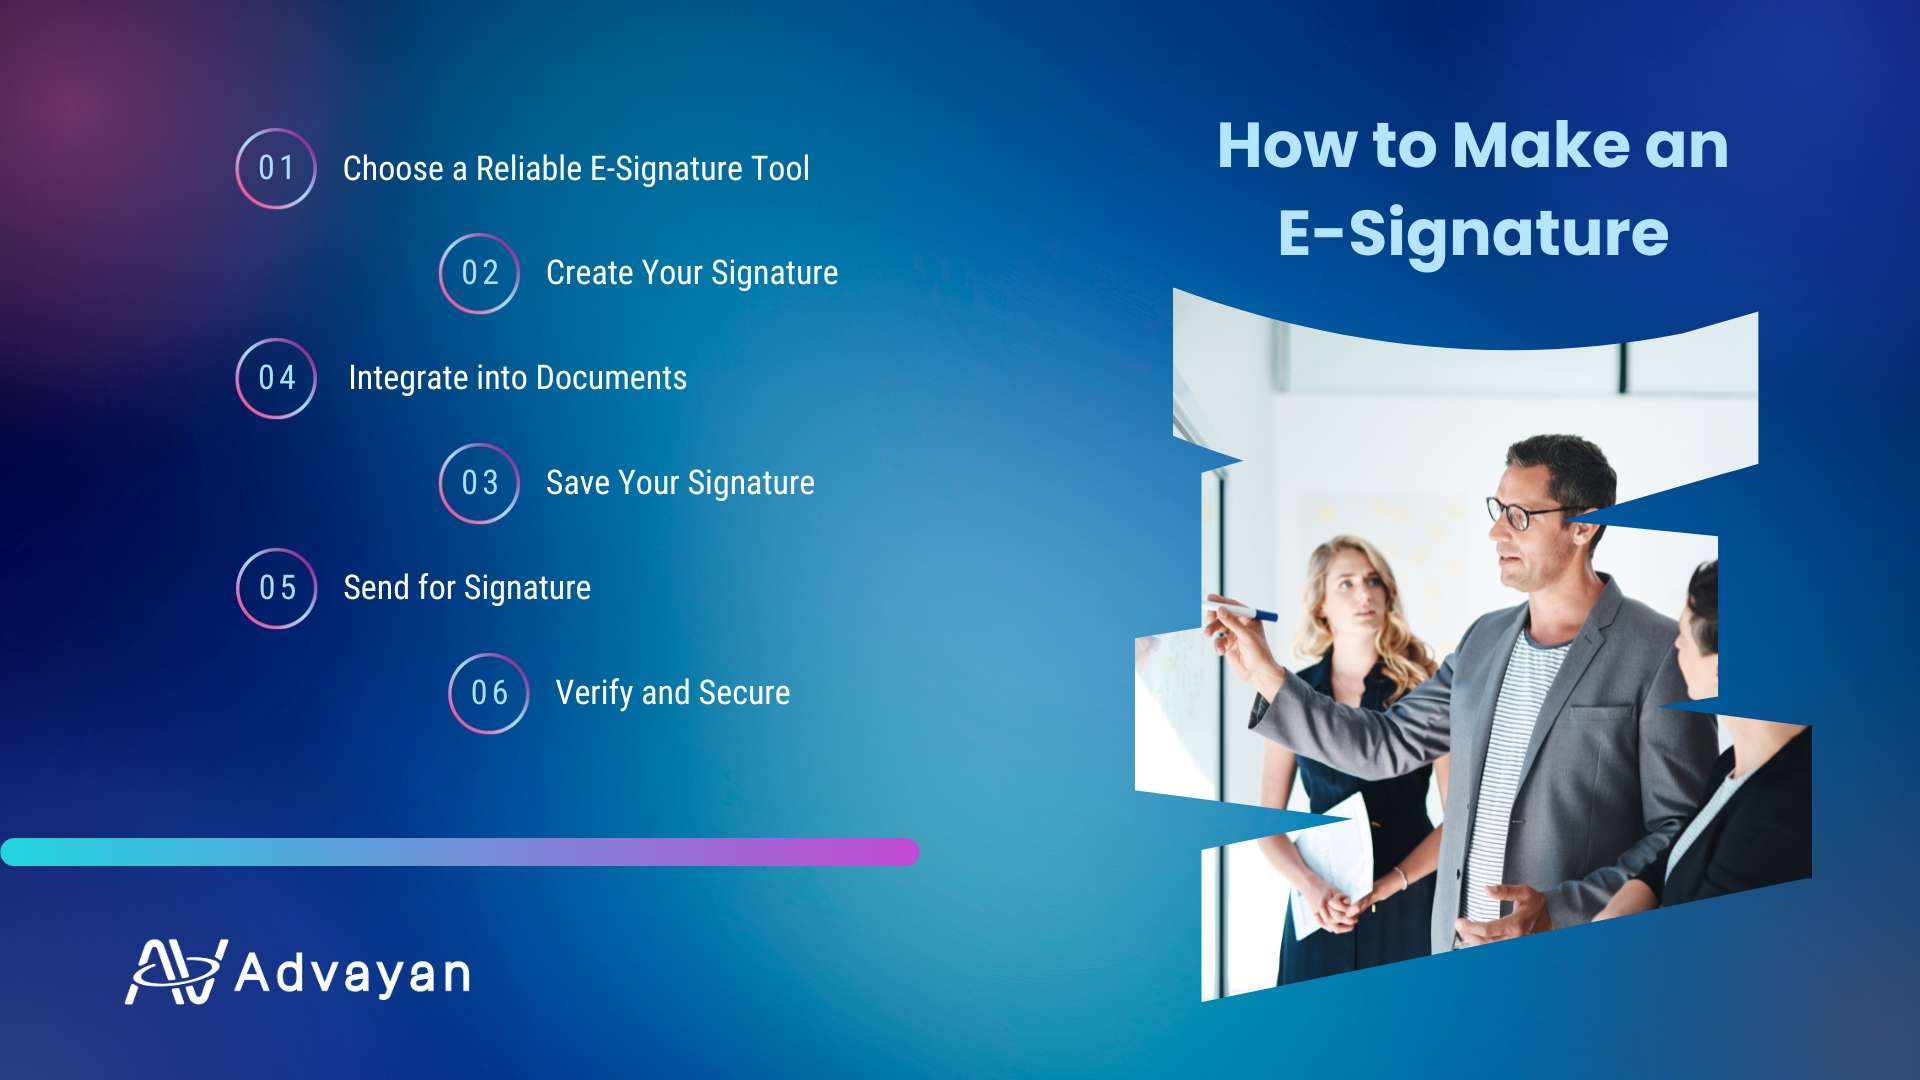 How to Make an E-Signature